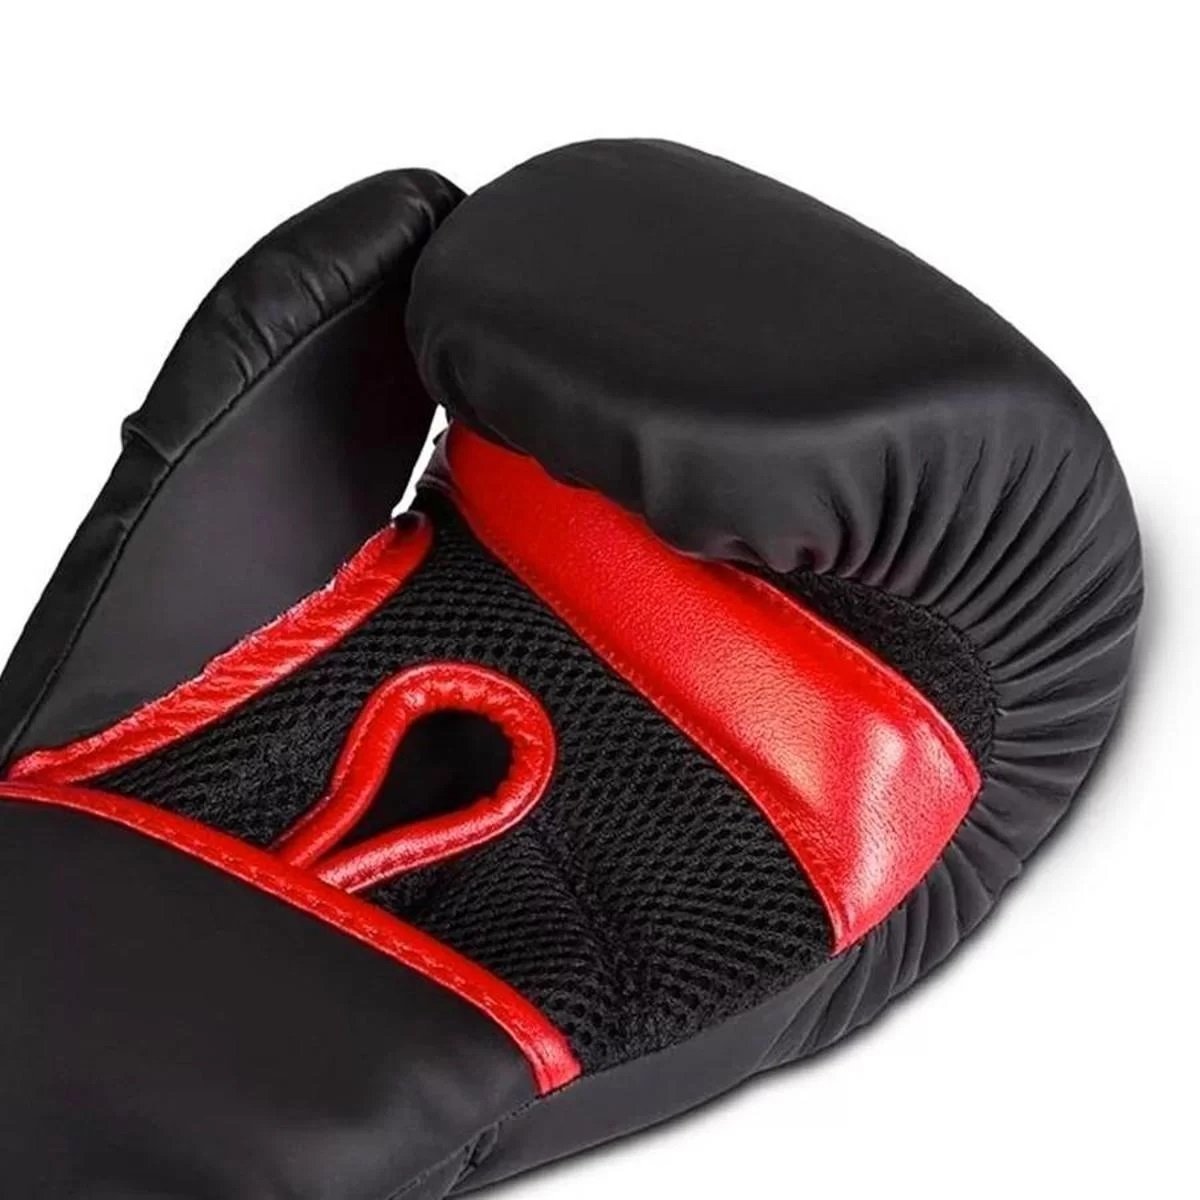 Kit Luva de Boxe Muay Thai - Naja Black Preto/vermelho + Bandagem+bucal:14/preto/vermelho - 10